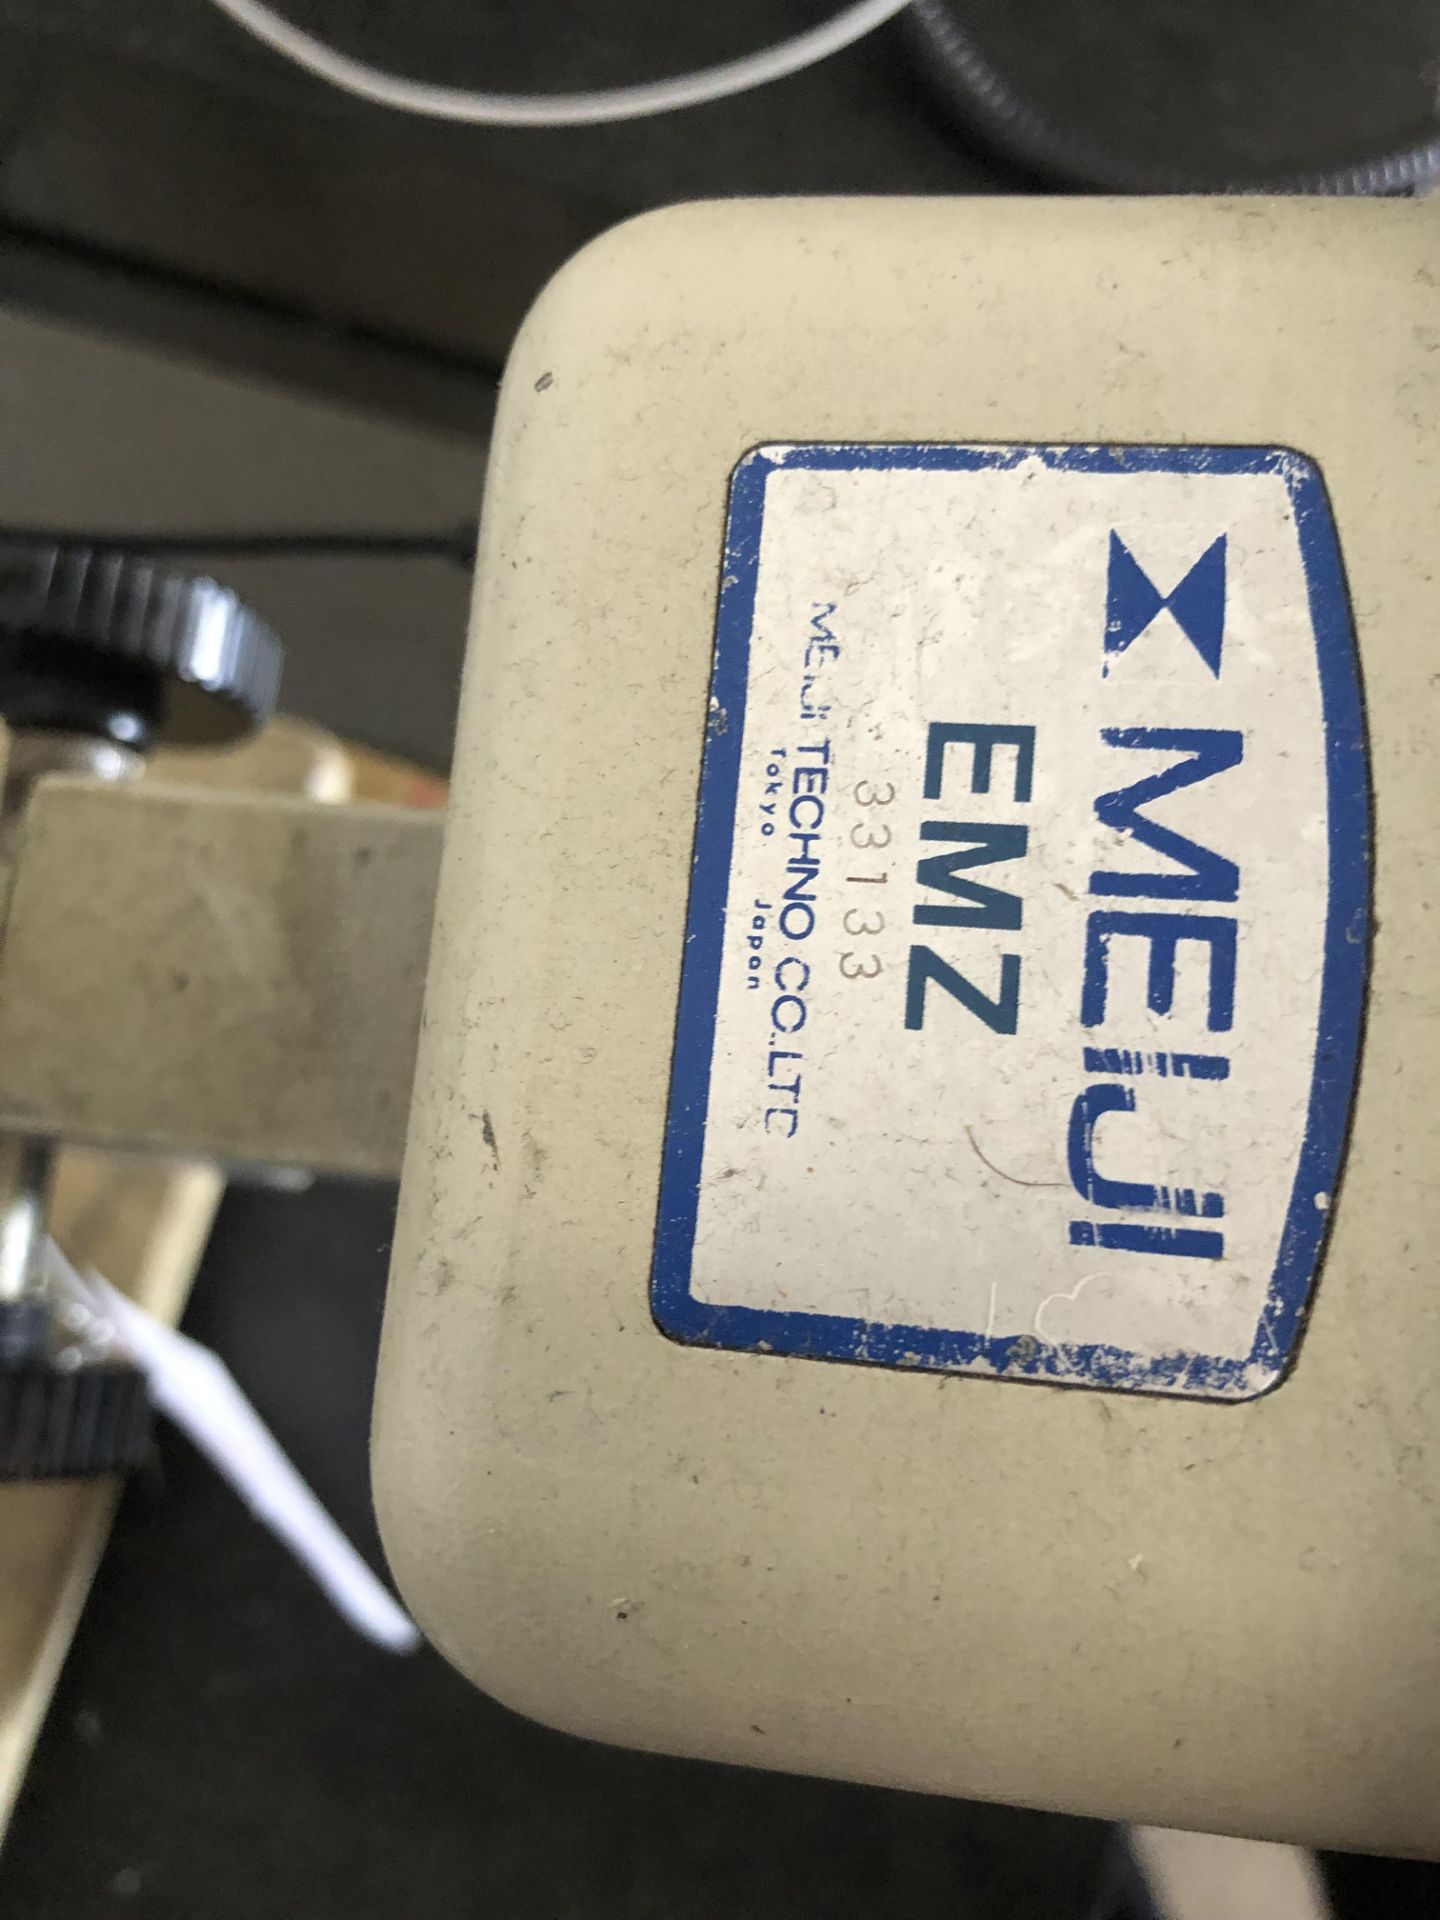 Meji EMZ Stereo Microscope, S/N 33133 (SOLD AS-IS - NO WARRANTY) - Image 2 of 3